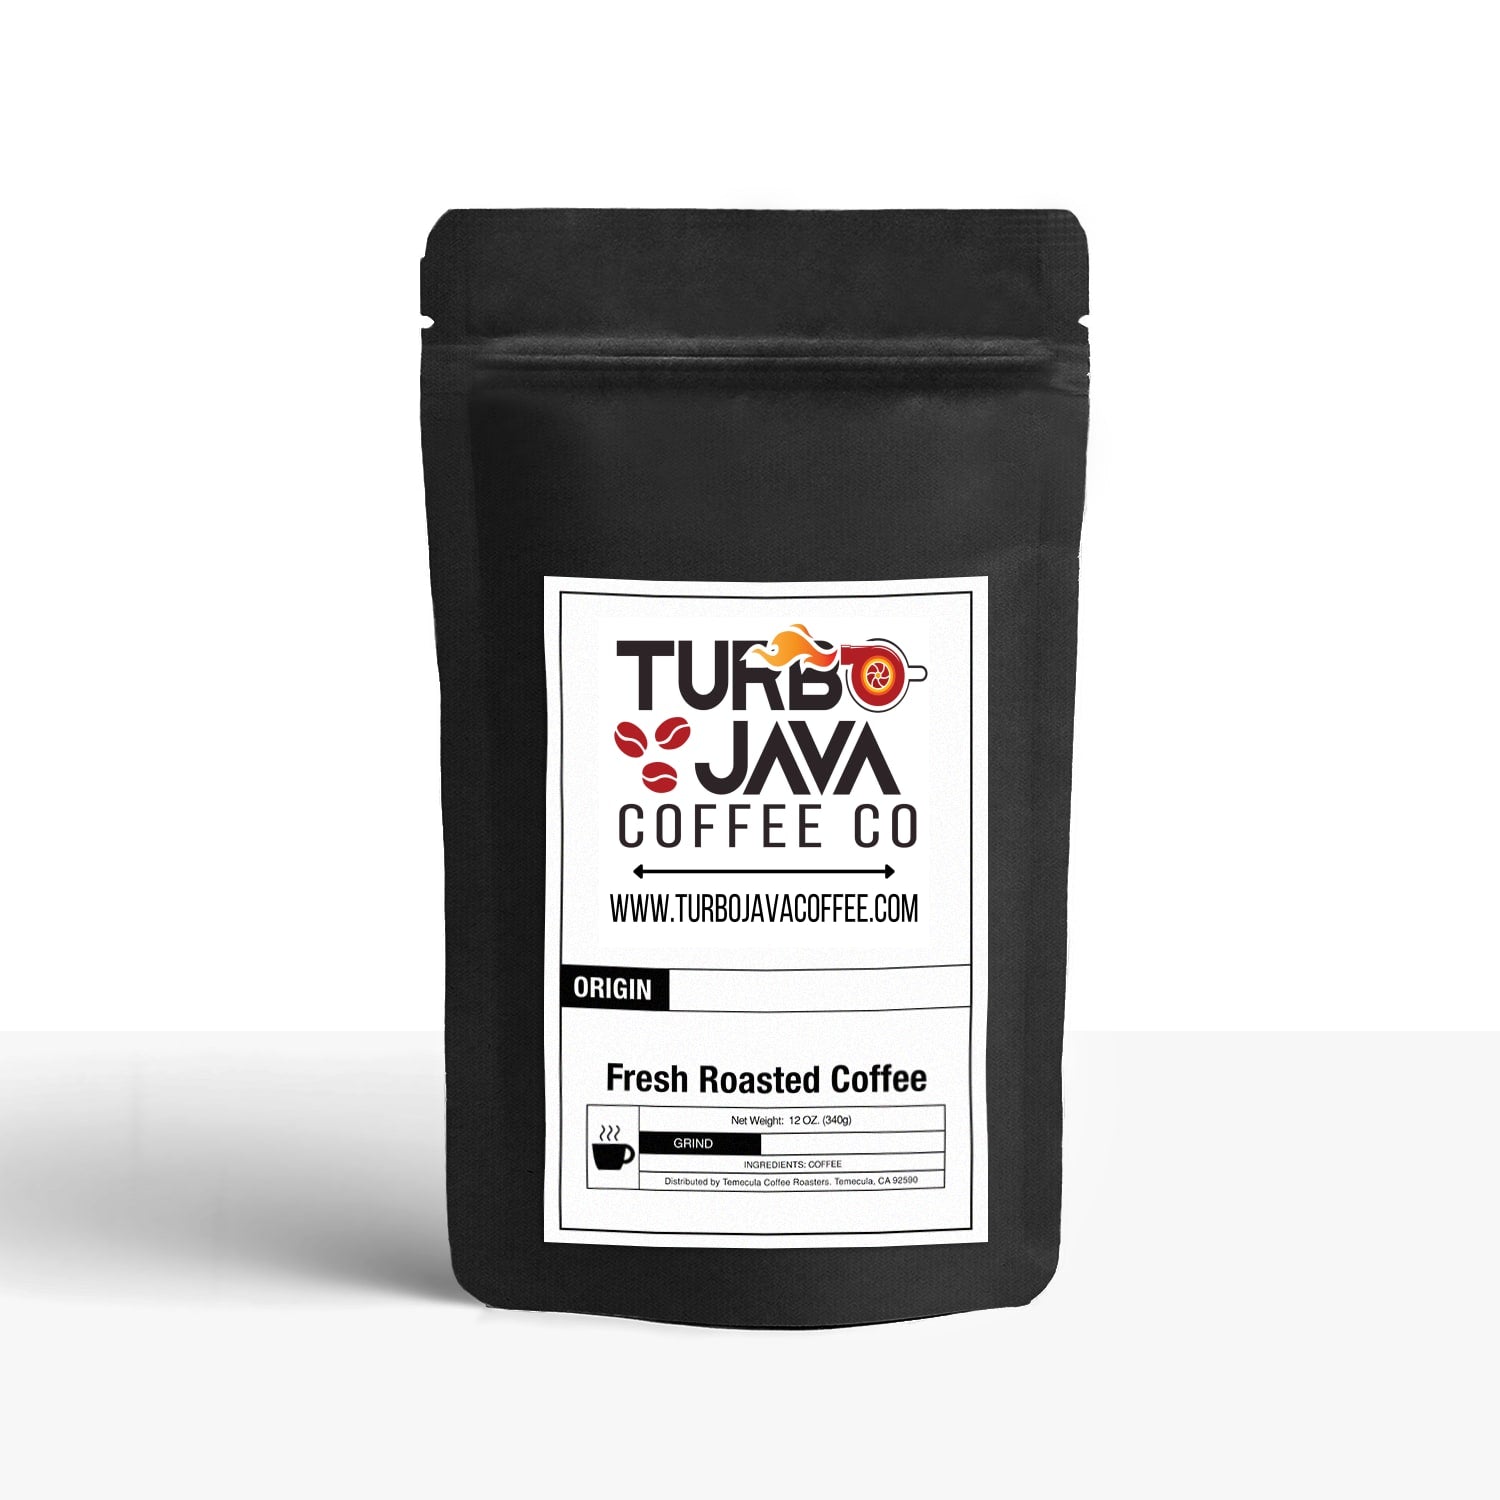 Turbo Java Coffee Co. House Blend Coffee 12 oz / Standard,12 oz / Espresso,12 oz / Whole Bean,1 lb / Standard,1 lb / Espresso,1 lb / Whole Bean,2 lb / Standard,2 lb / Espresso,2 lb / Whole Bean,5 lb / Standard,5 lb / Espresso,5 lb / Whole Bean